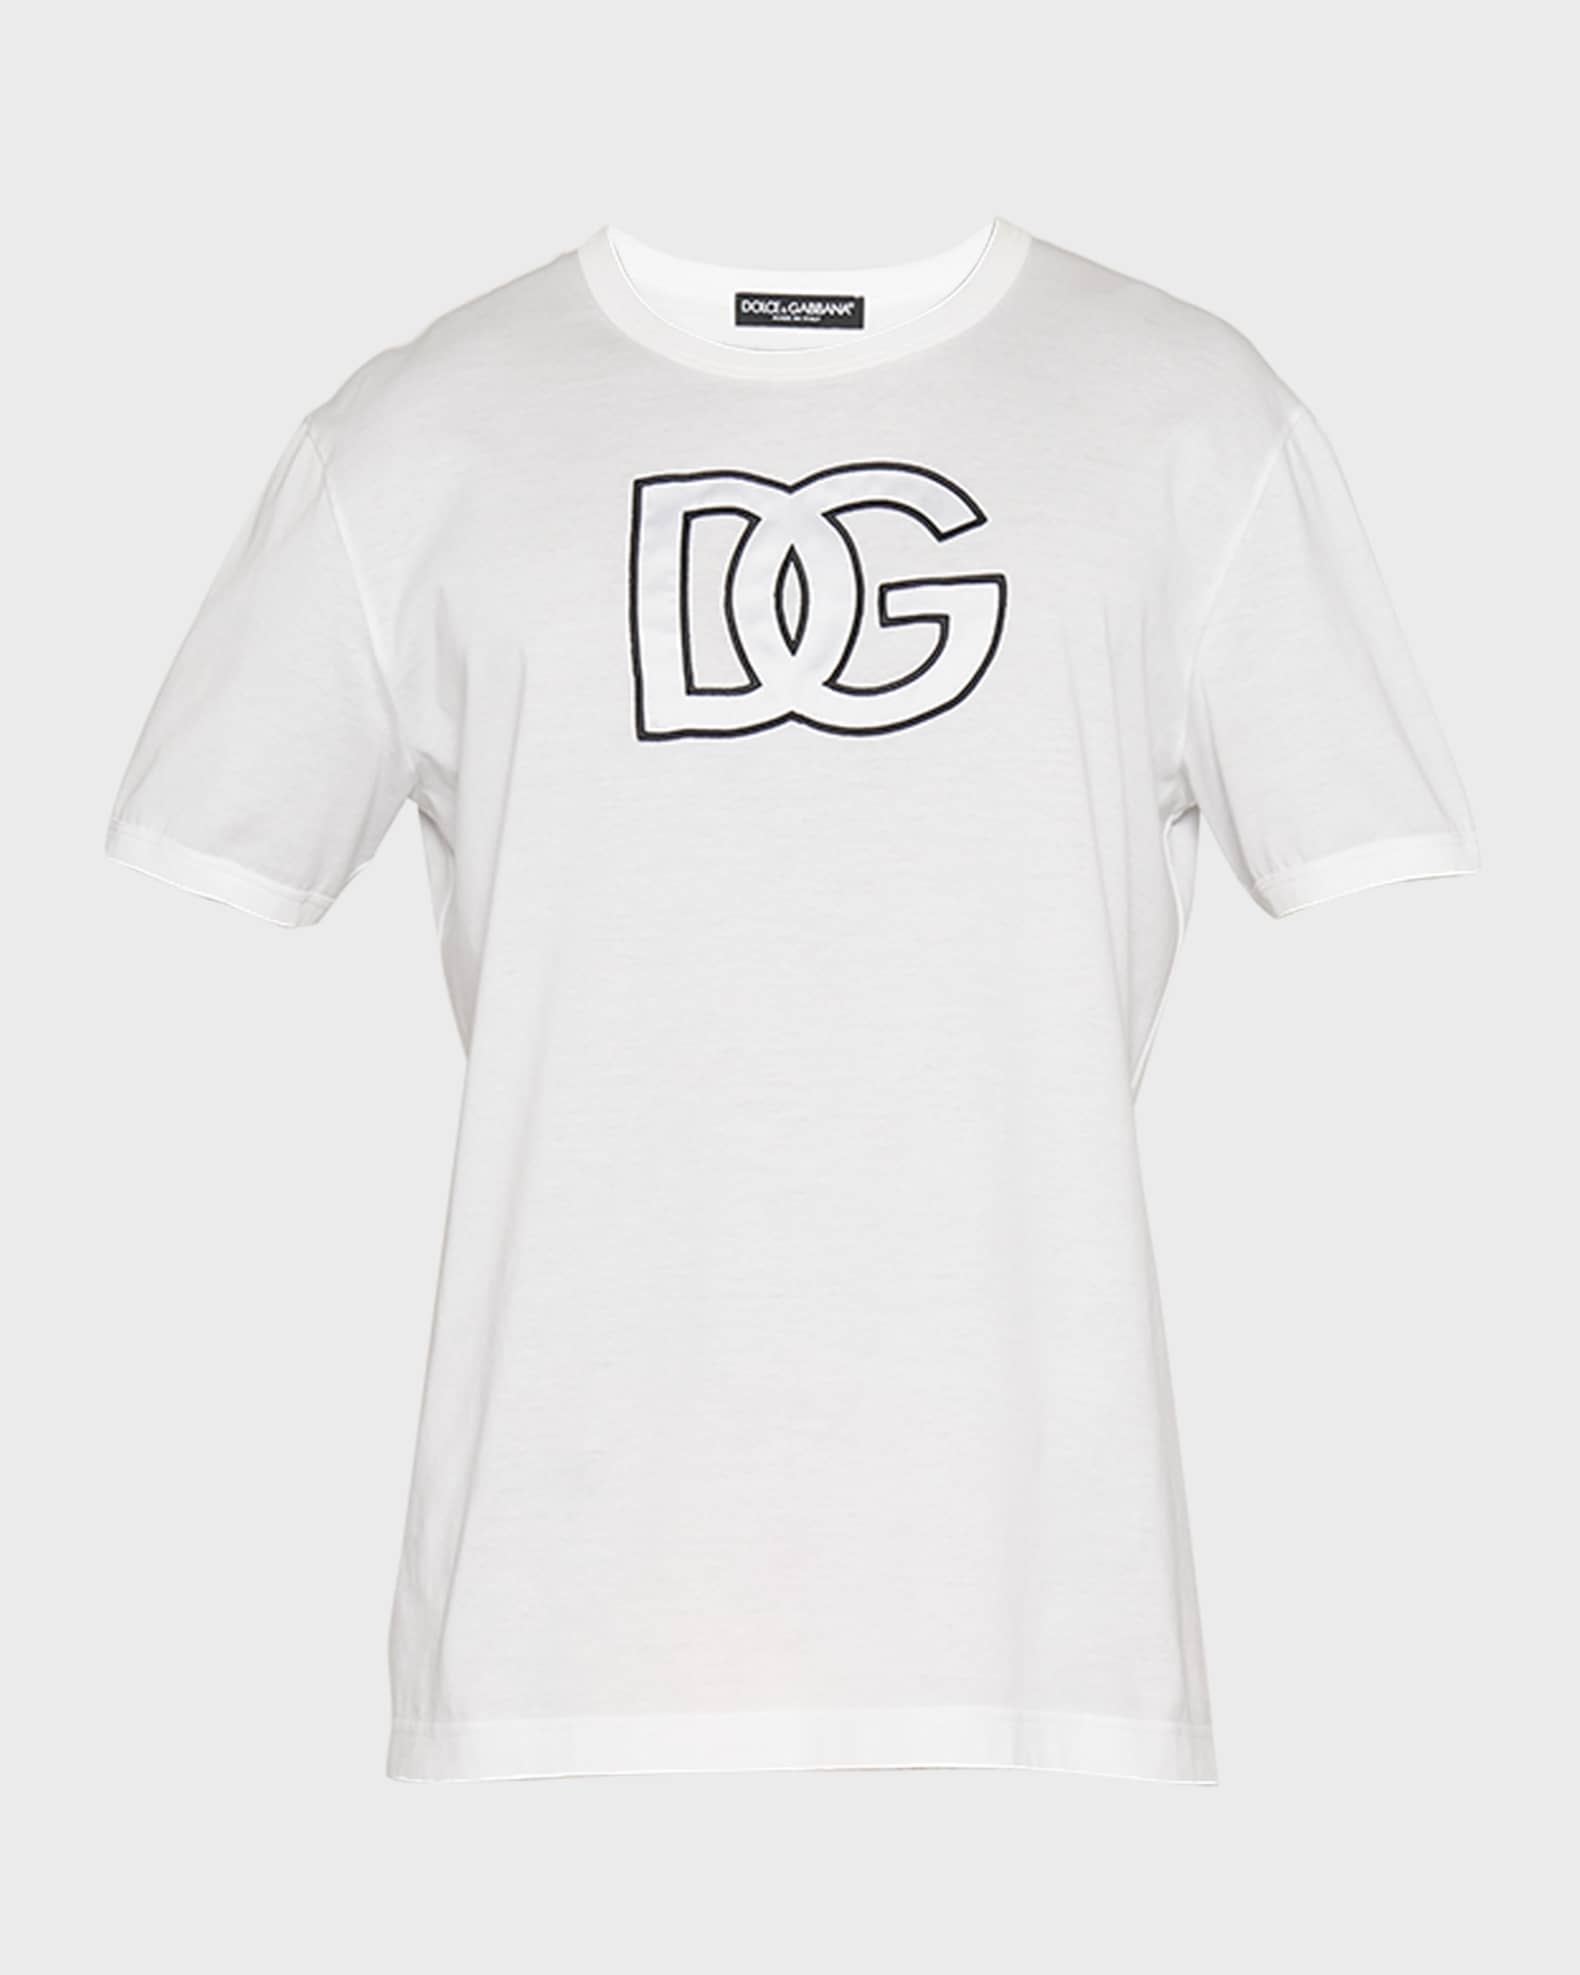 Dolce&Gabbana Men's T-Shirt with Satin DG Patch | Neiman Marcus